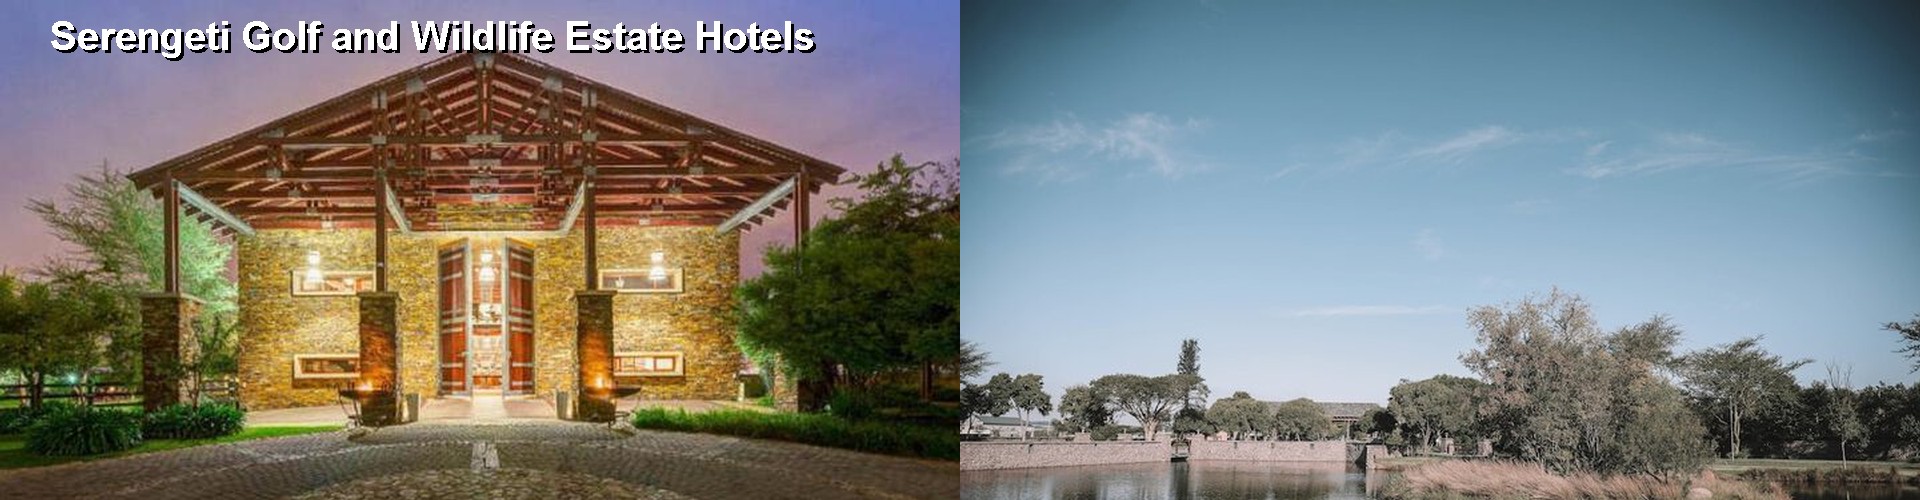 5 Best Hotels near Serengeti Golf and Wildlife Estate